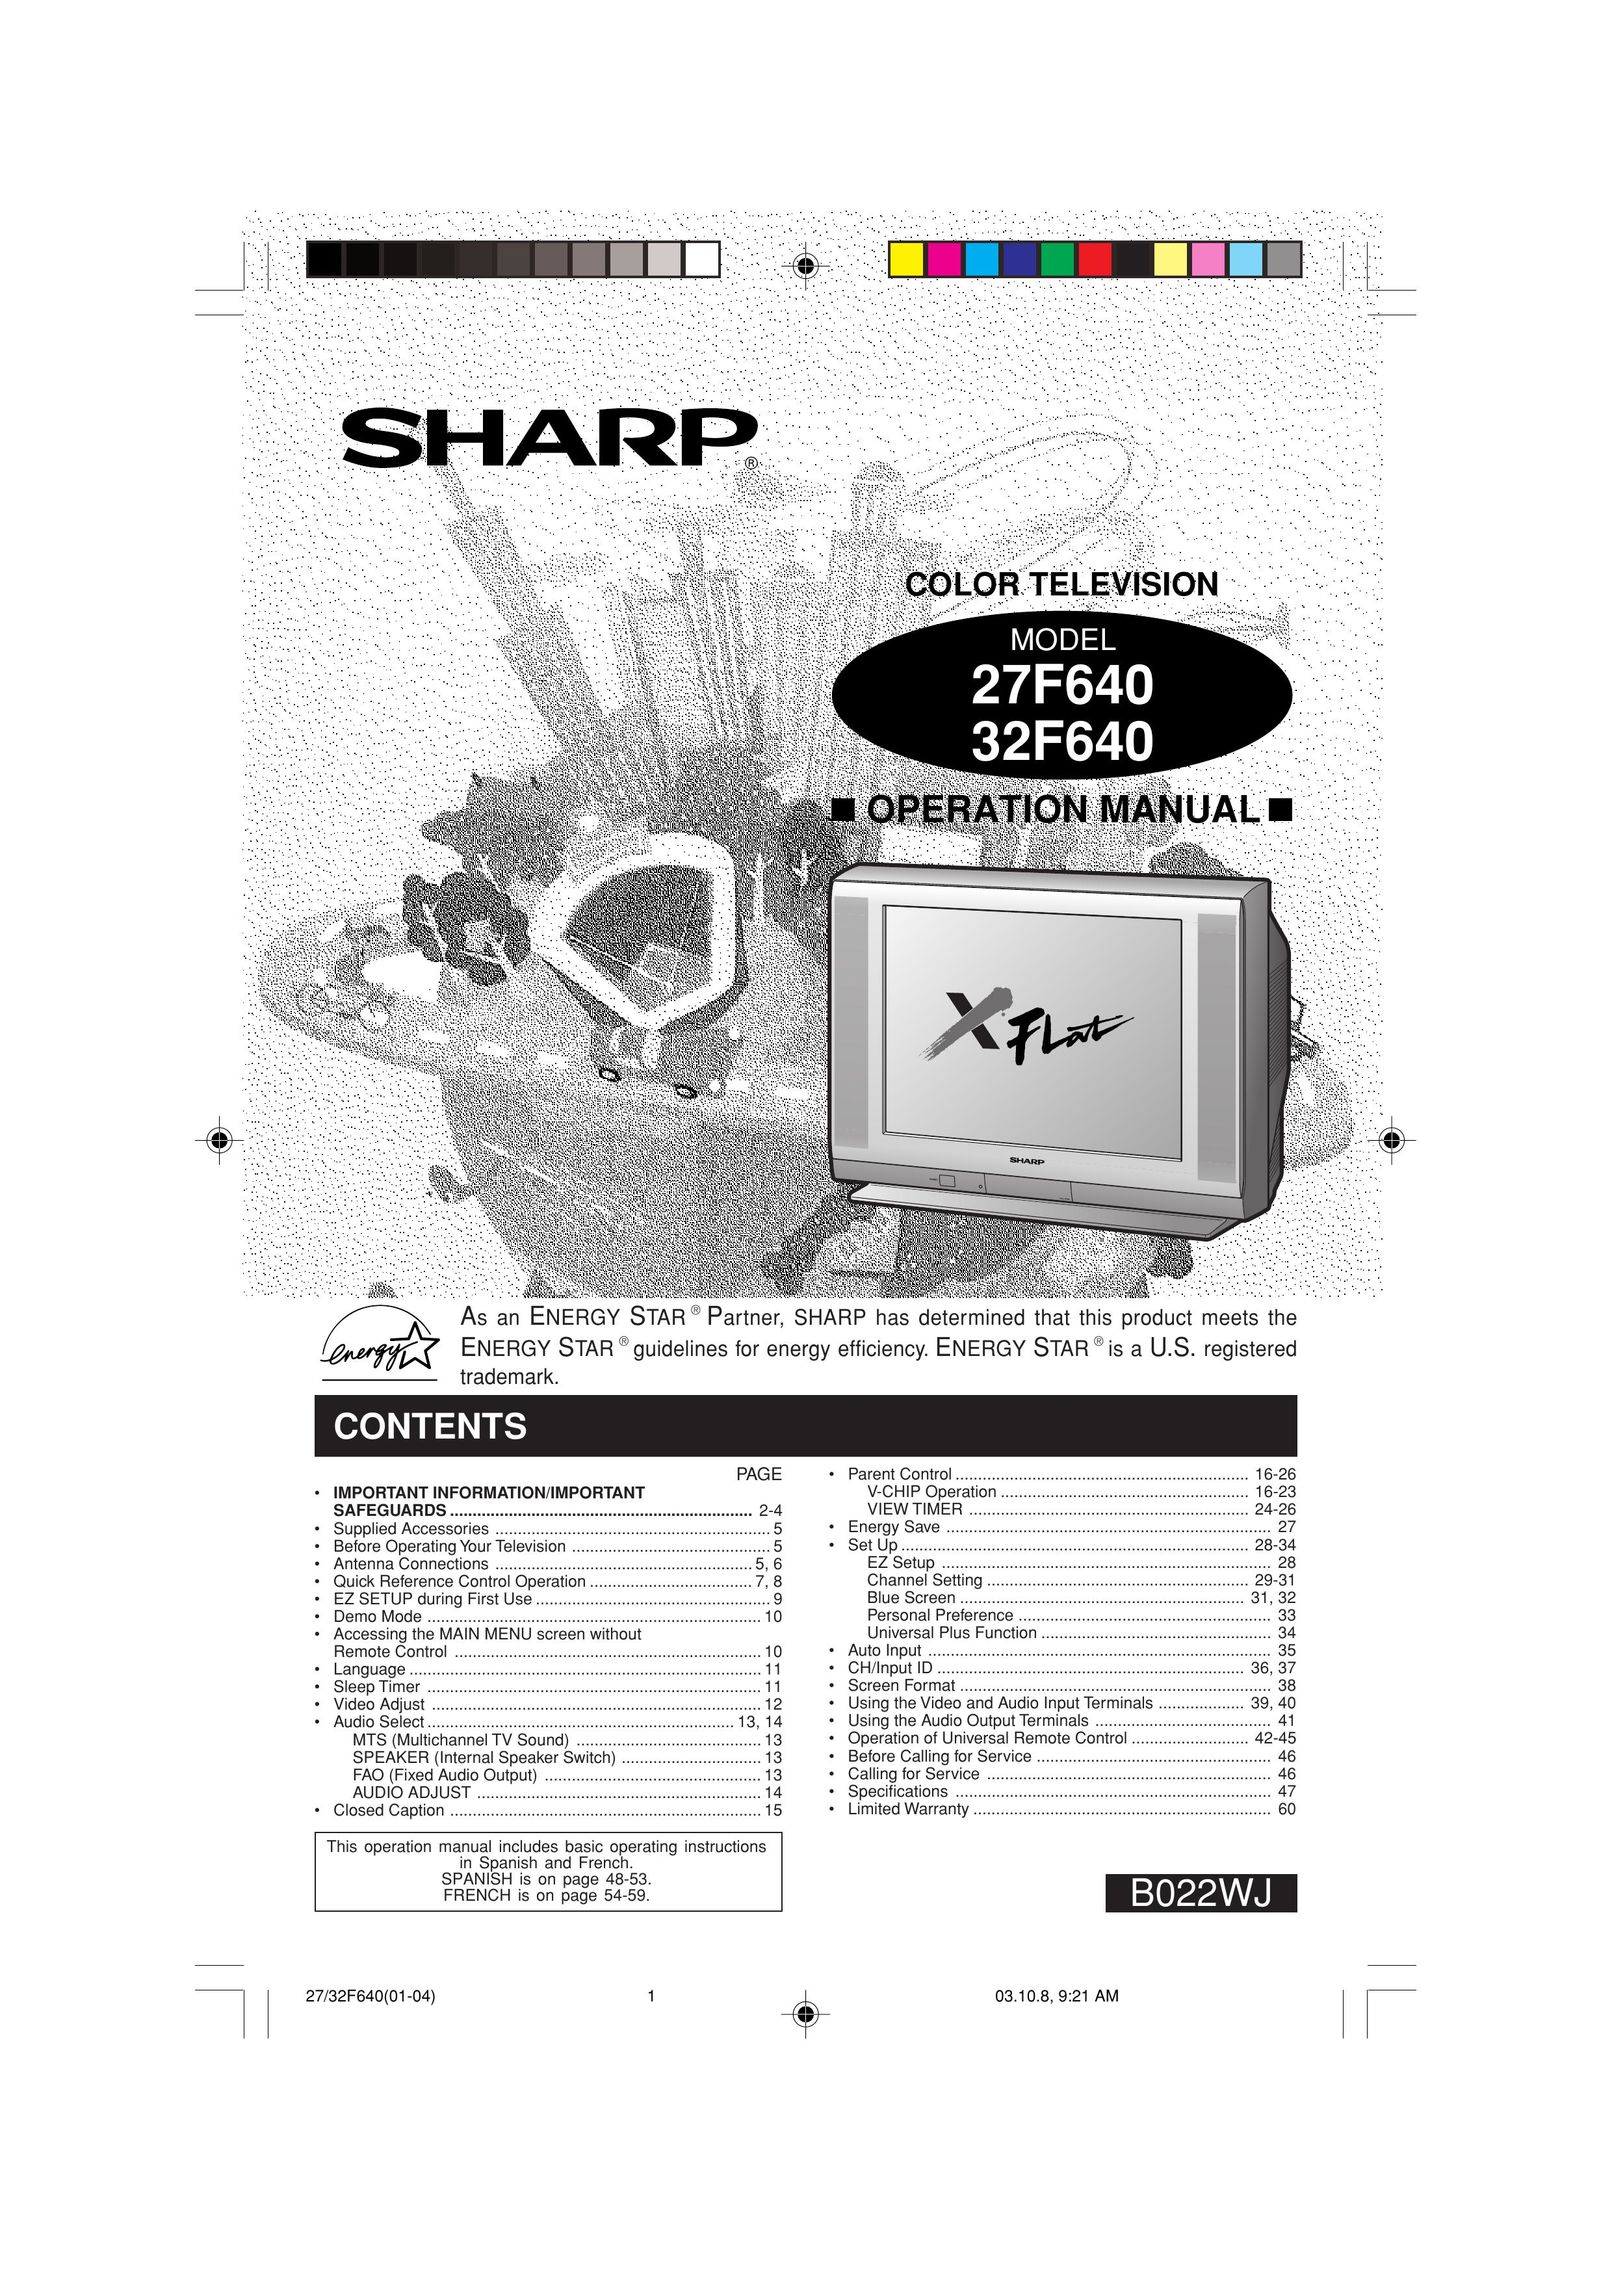 Sharp 27F640 CRT Television User Manual